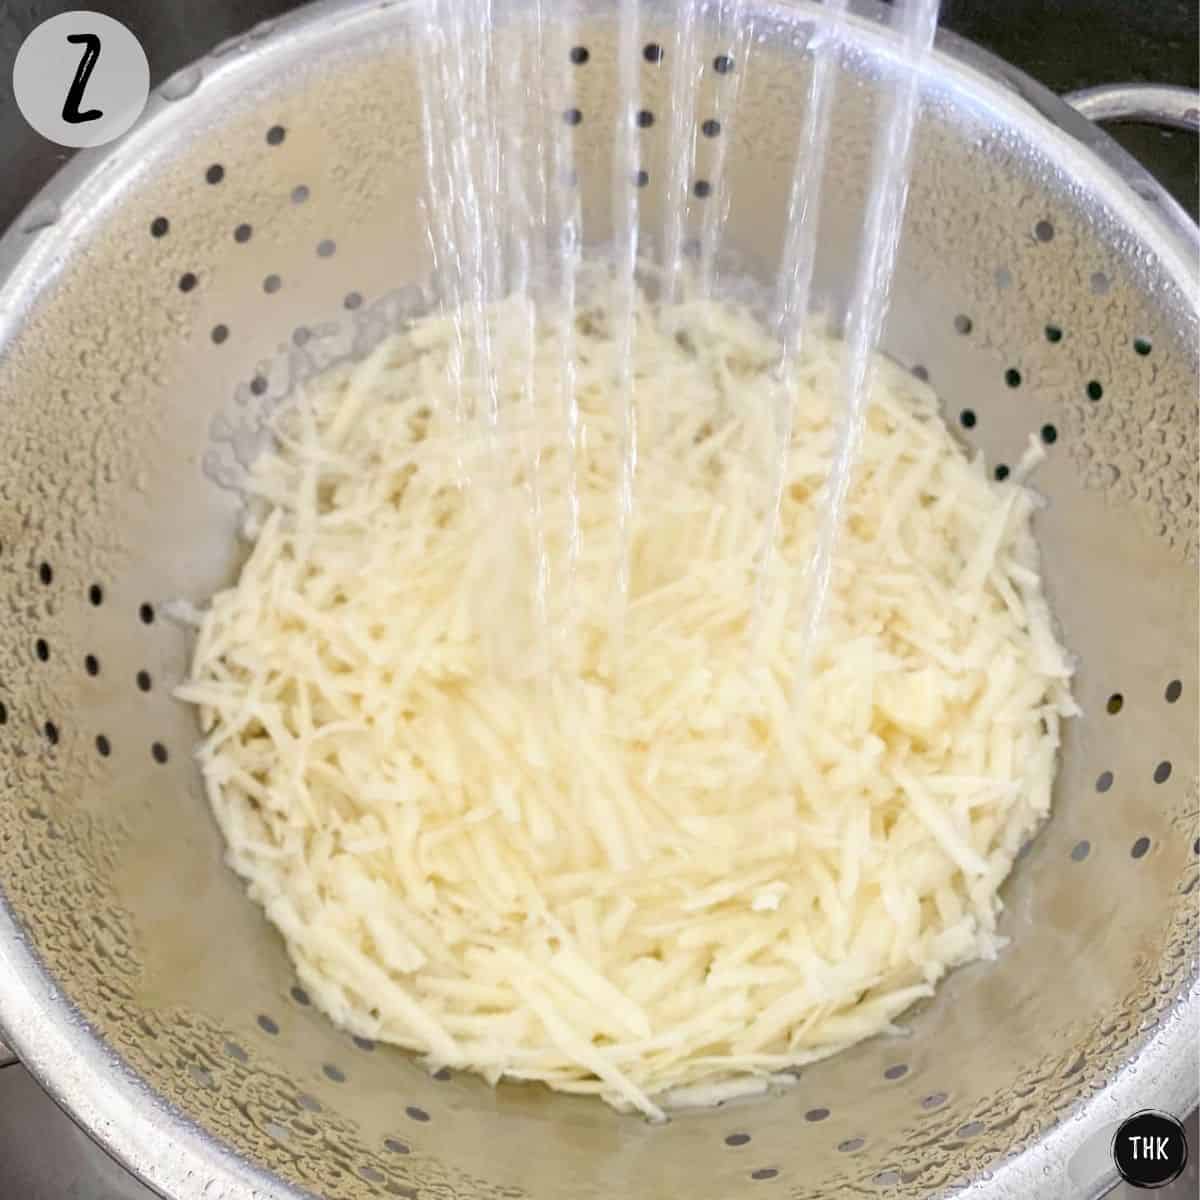 Shredded potatoes being rinsed inside colander.